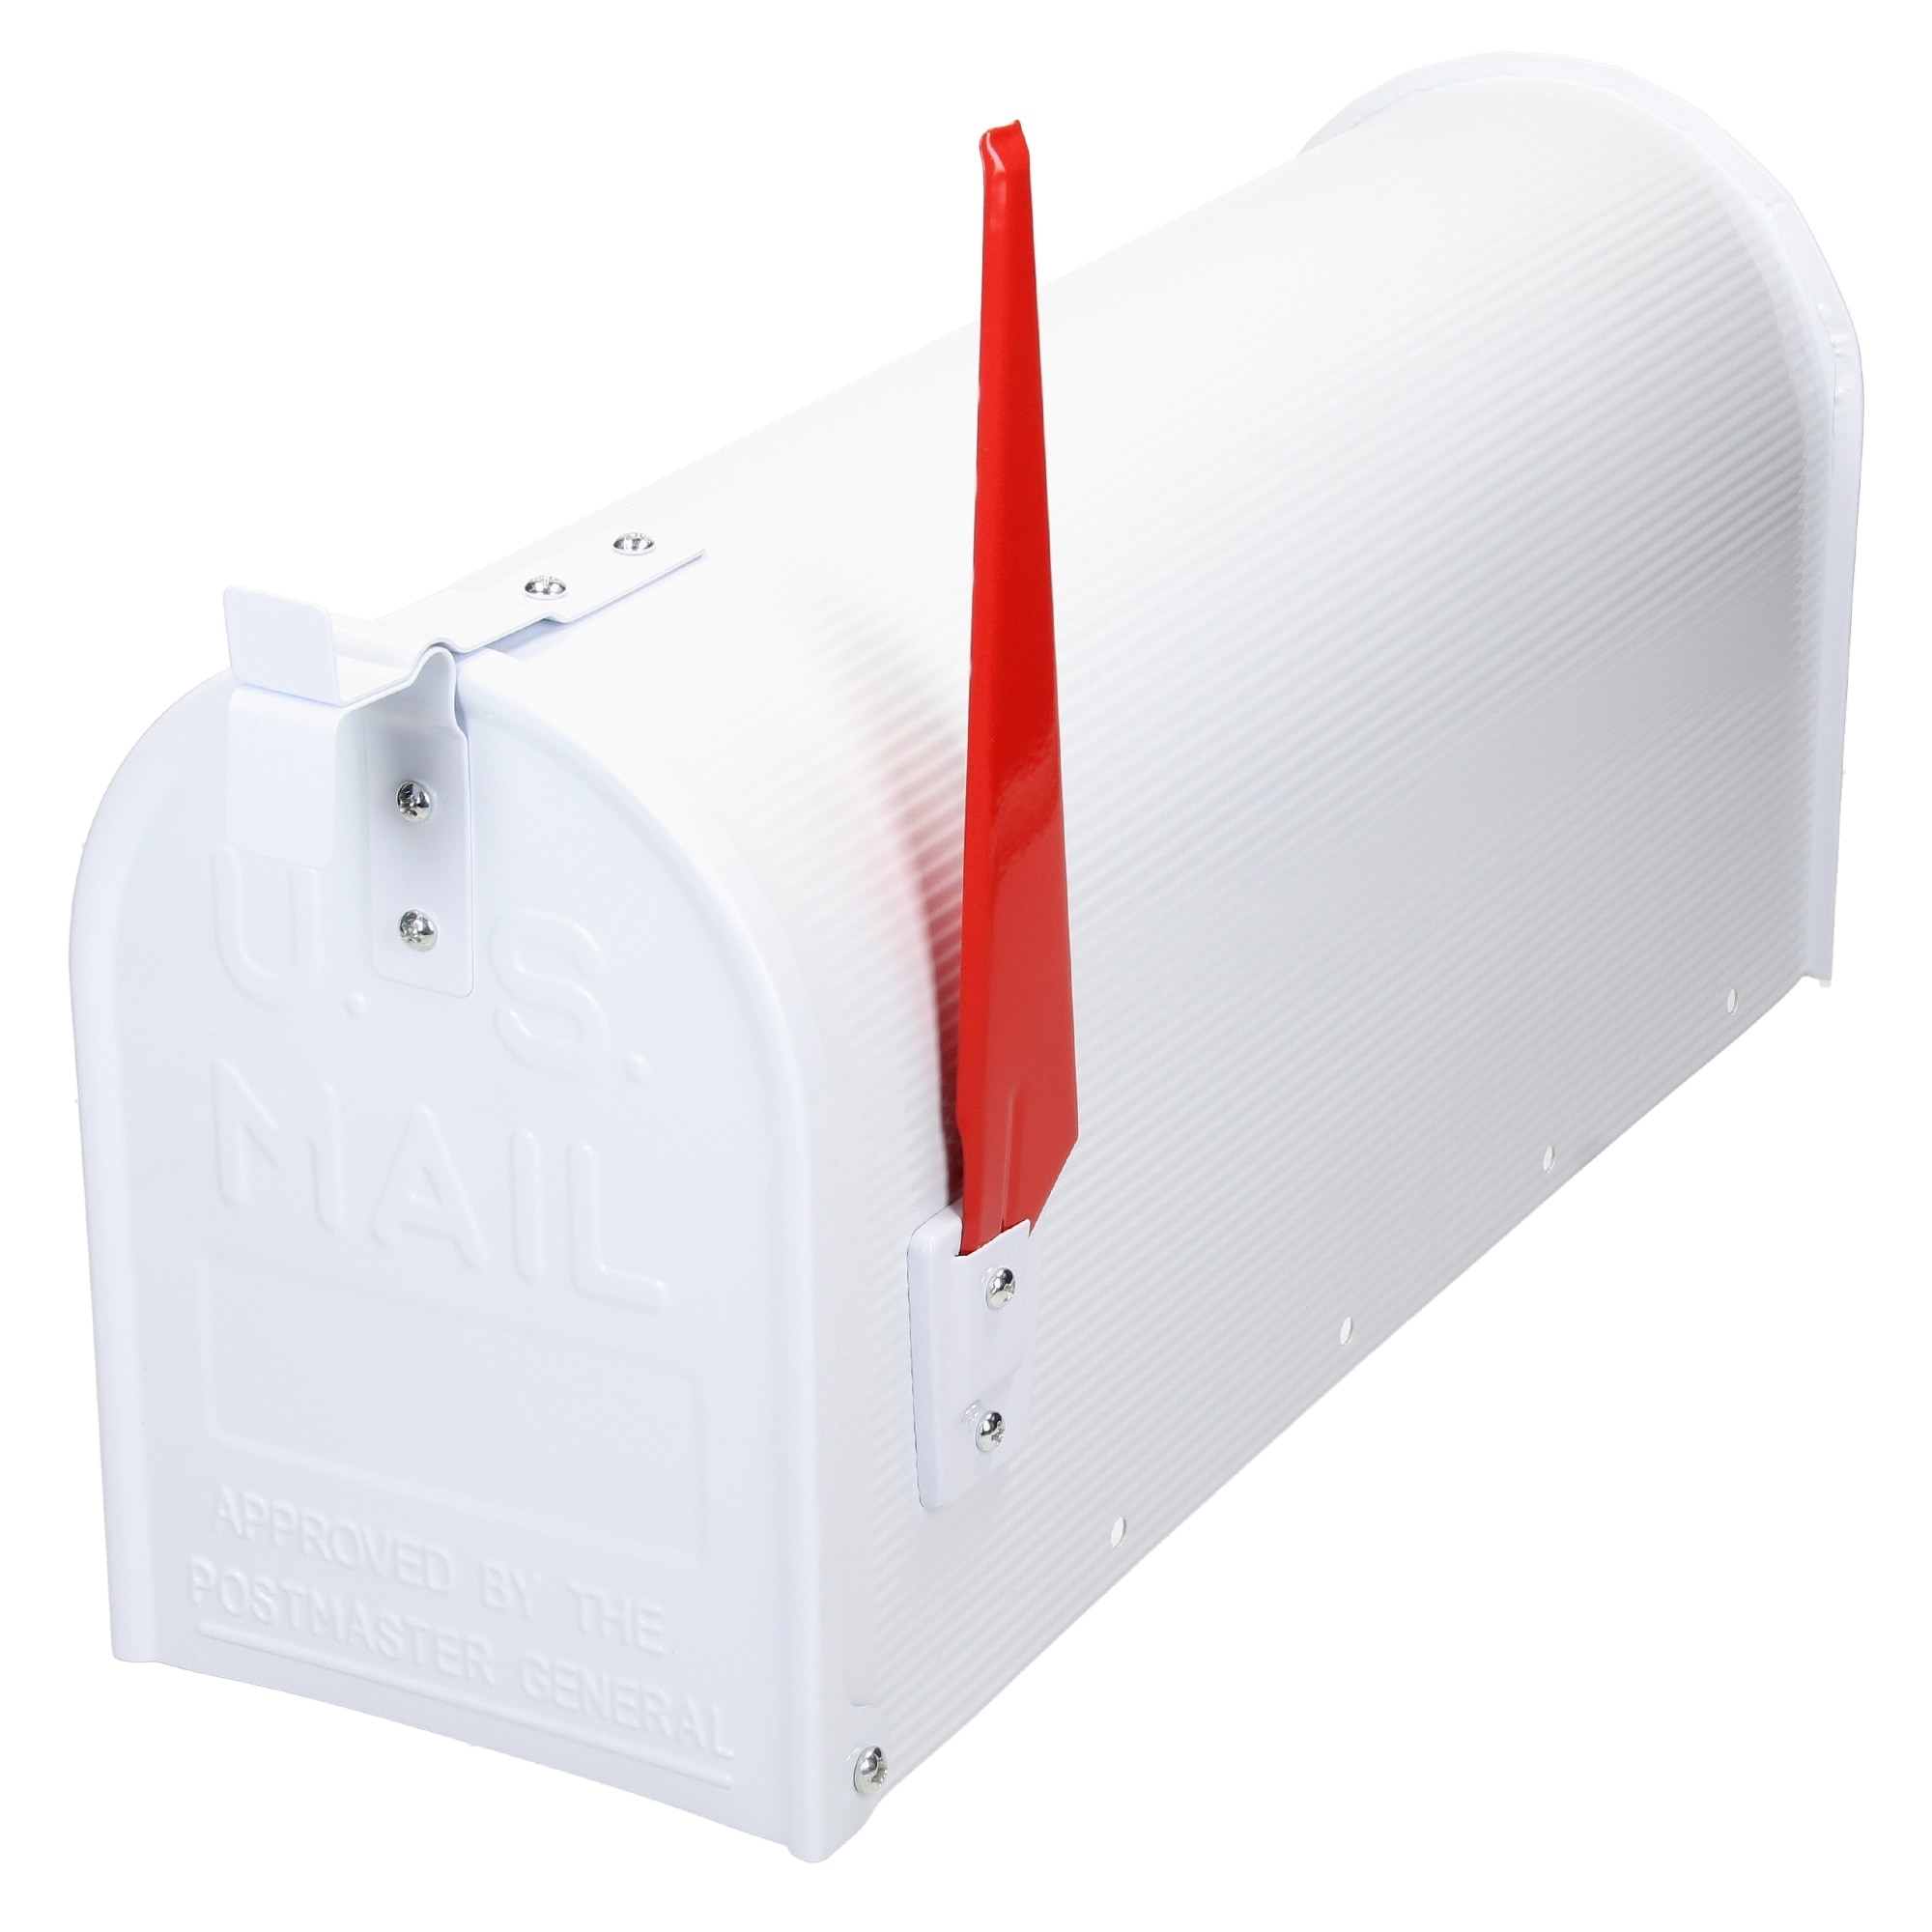 ML Design U.S. Postkasse med drejet rødt flag, hvid, aluminium, Elgiganten